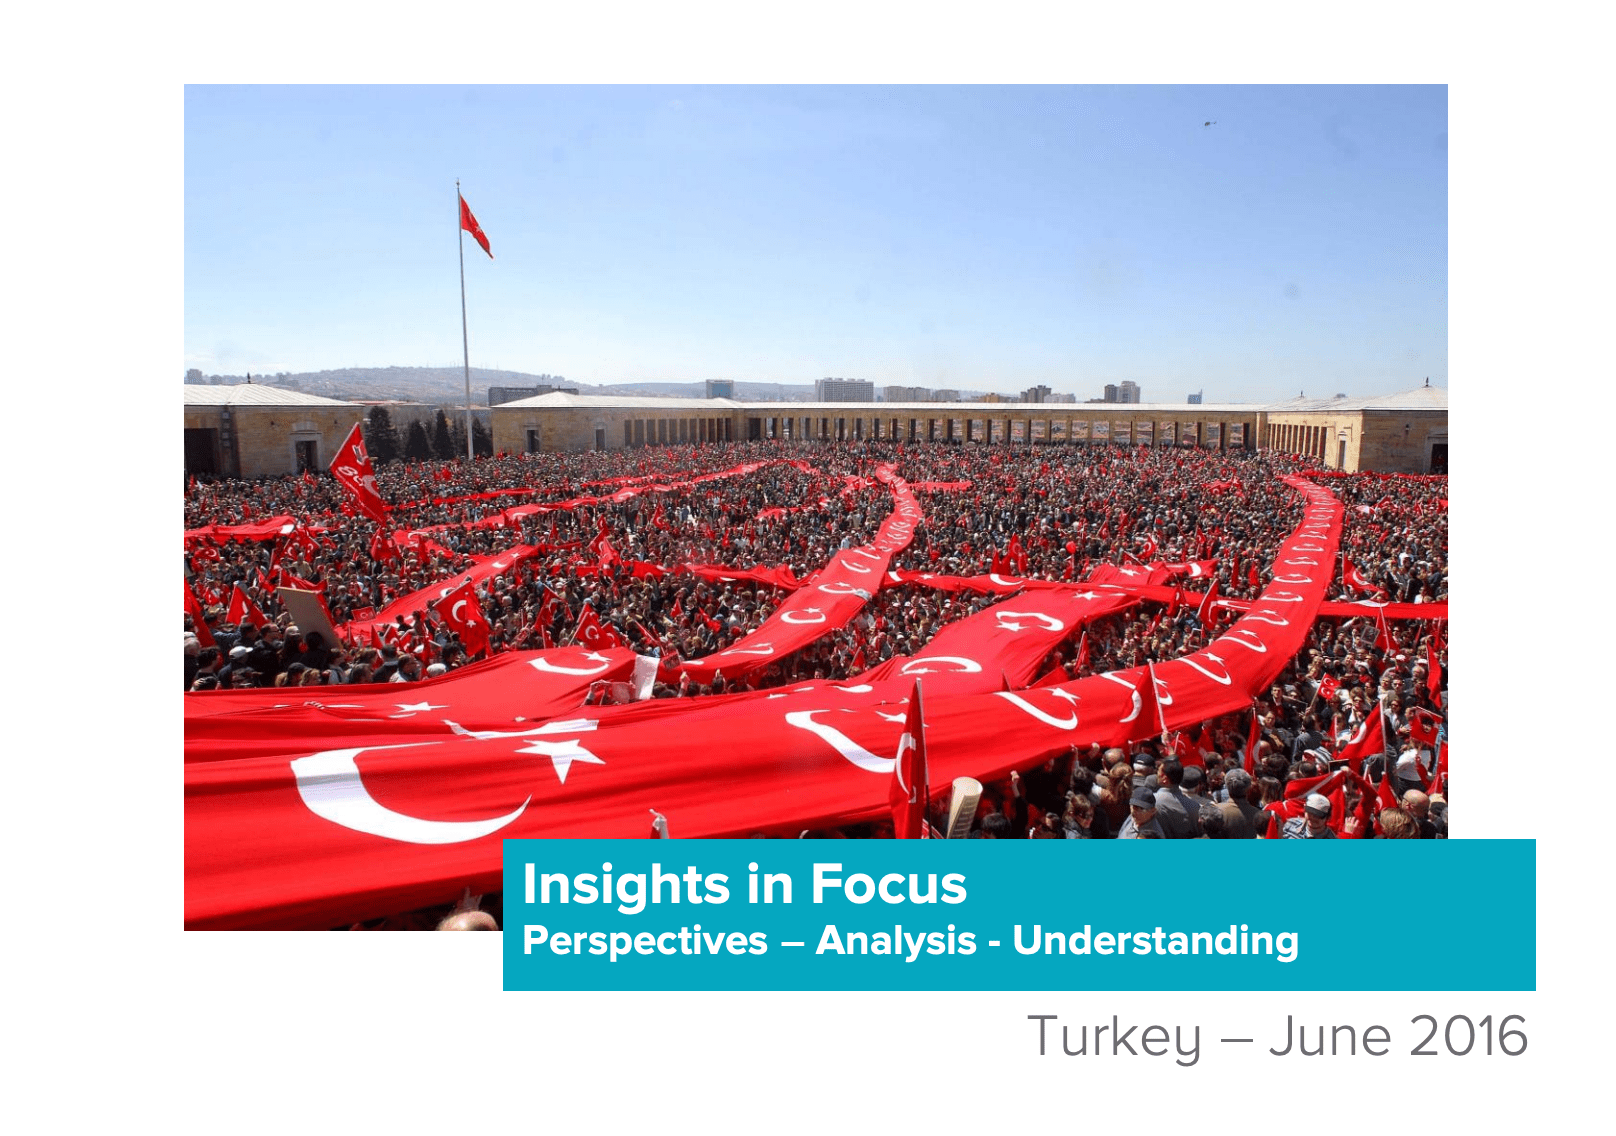 Insights in Focus Perspectives – Analysis - Understanding. Turkey, June 2016